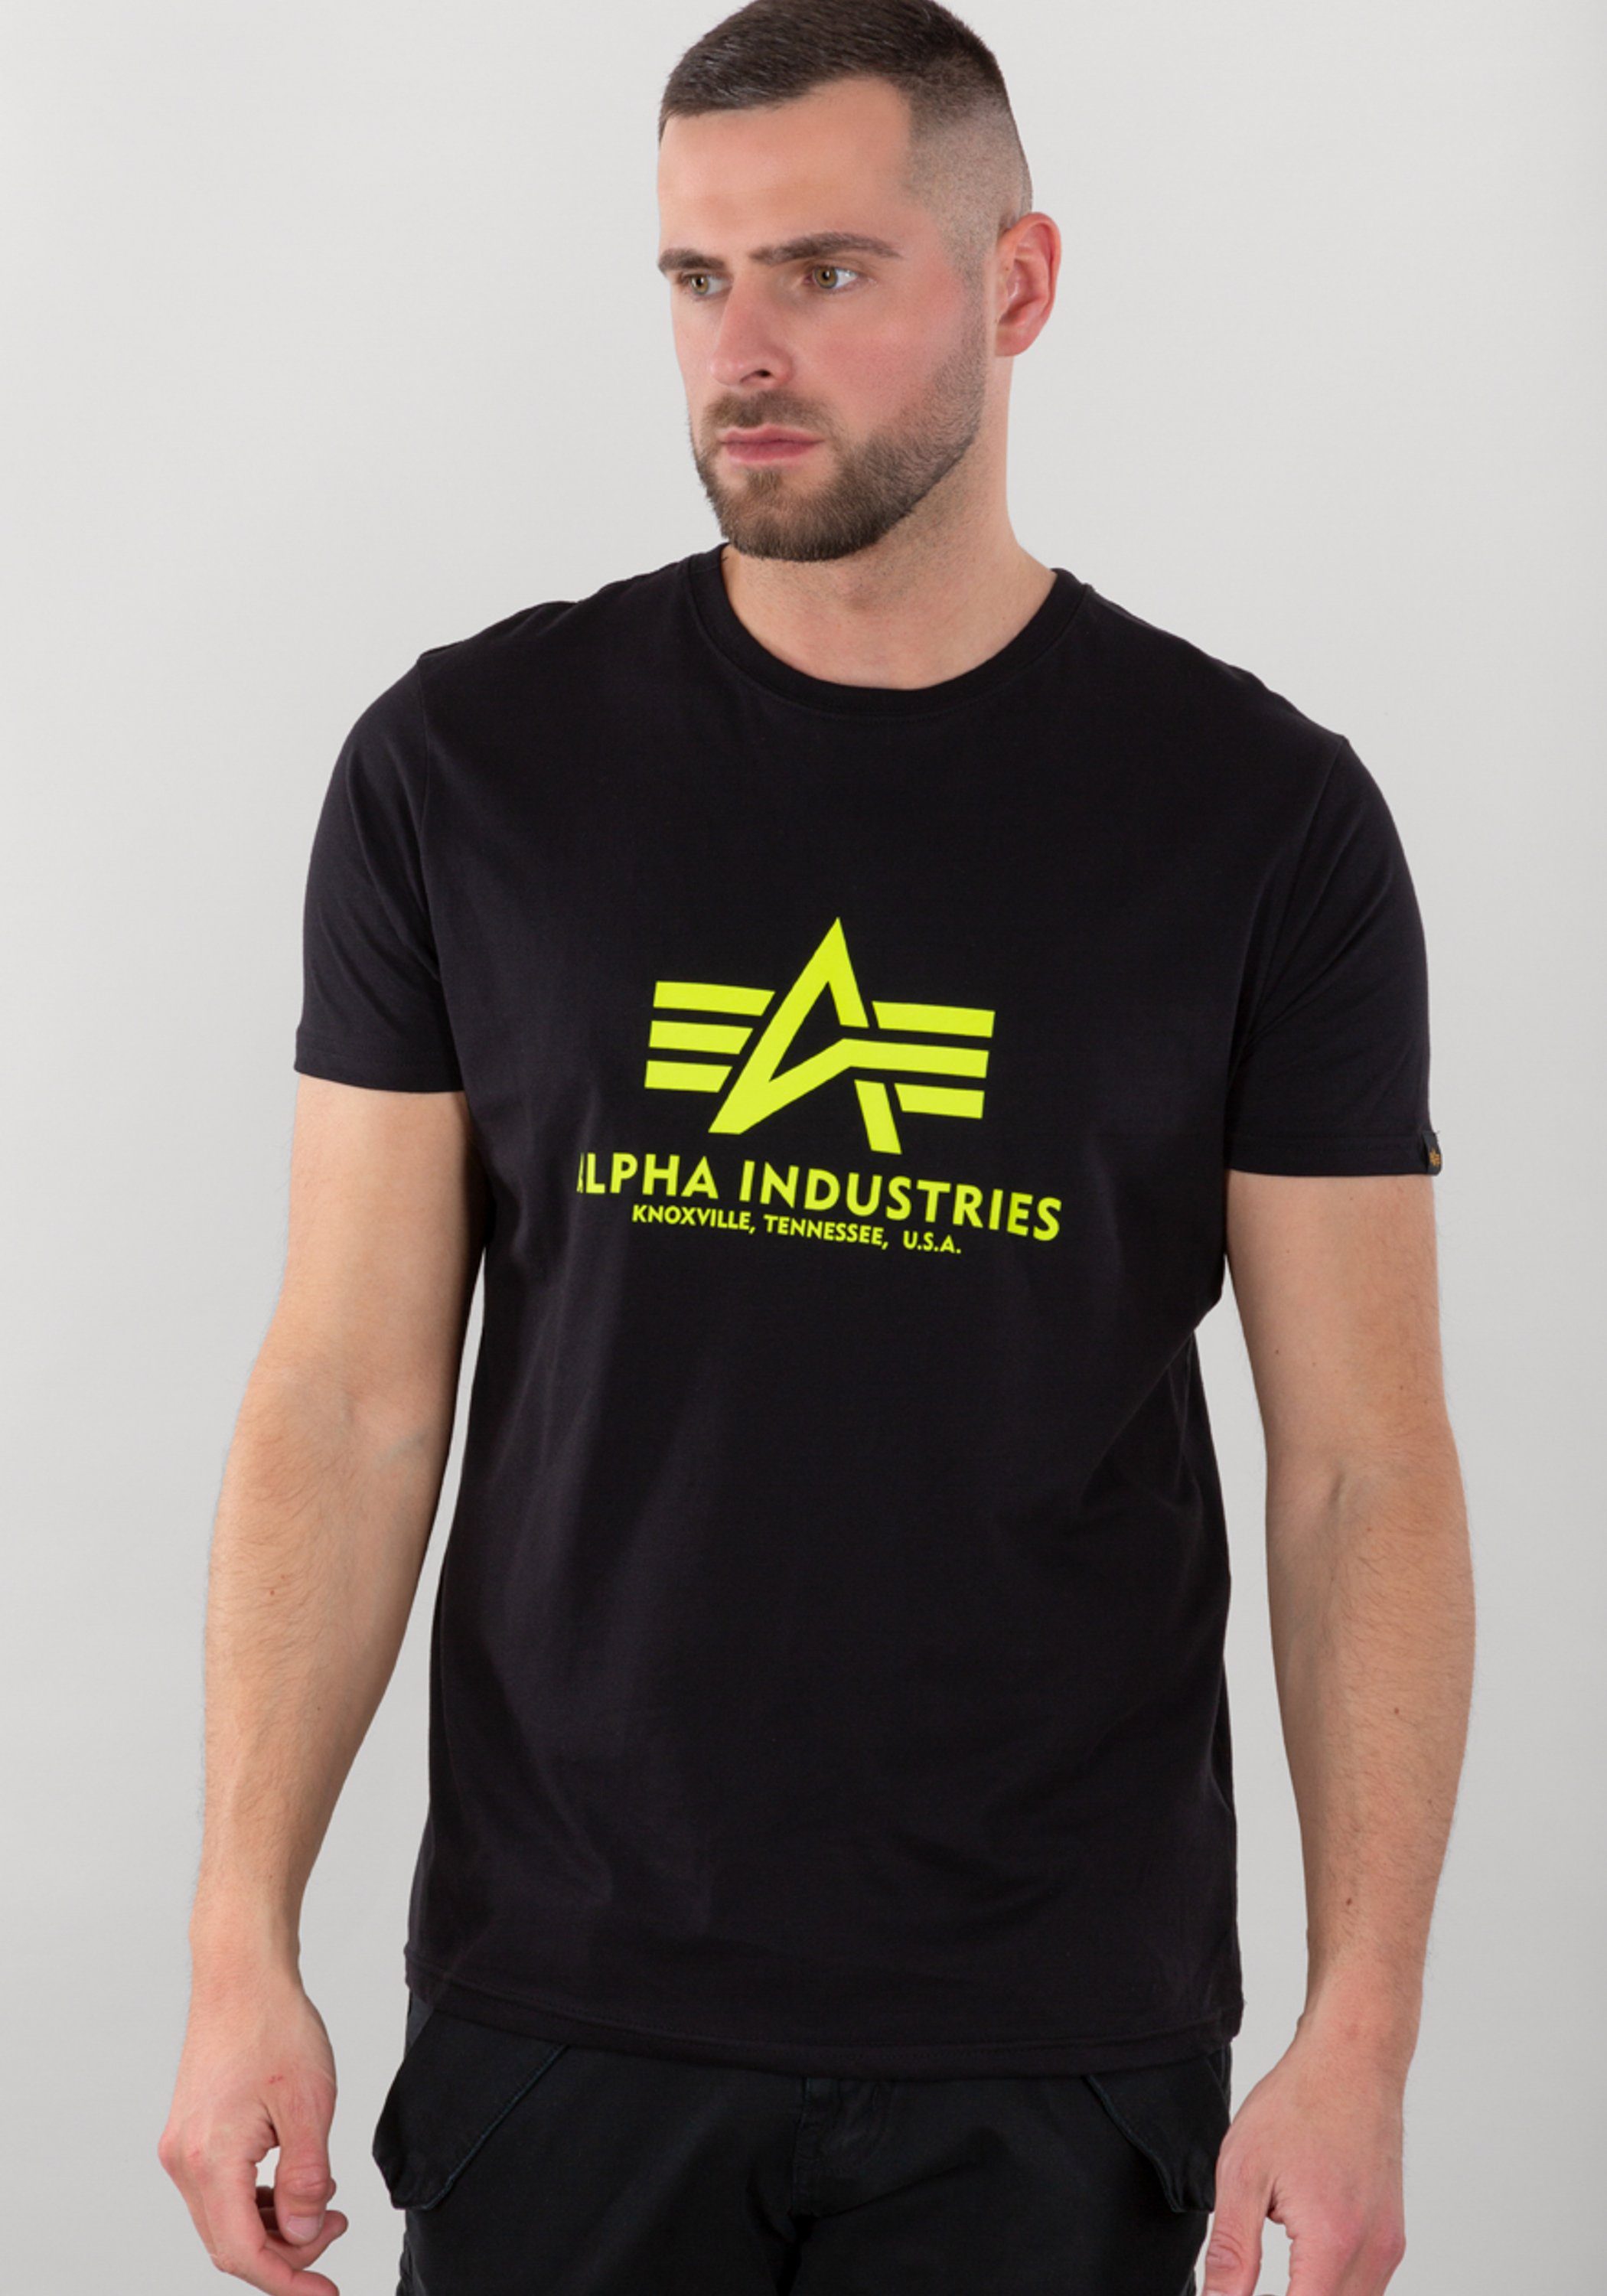 Alpha Industries T-shirt Men T-Shirts Basic T-Shirt Neon Print